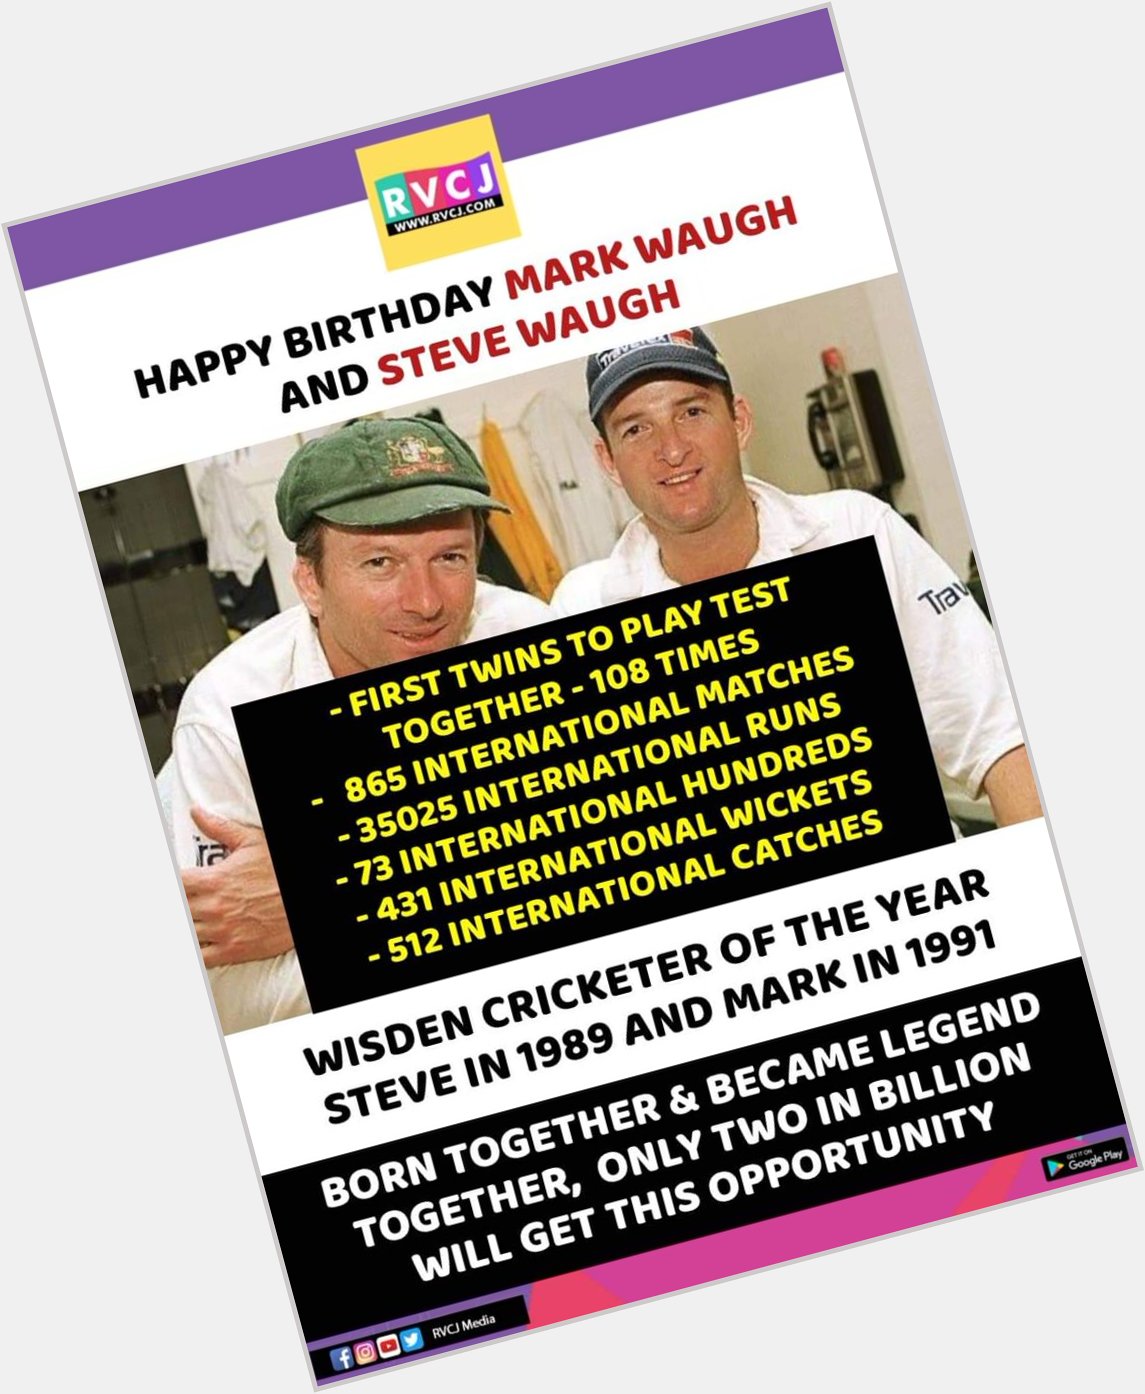 Happy Birthday Mark Waugh & Steve Waugh! 